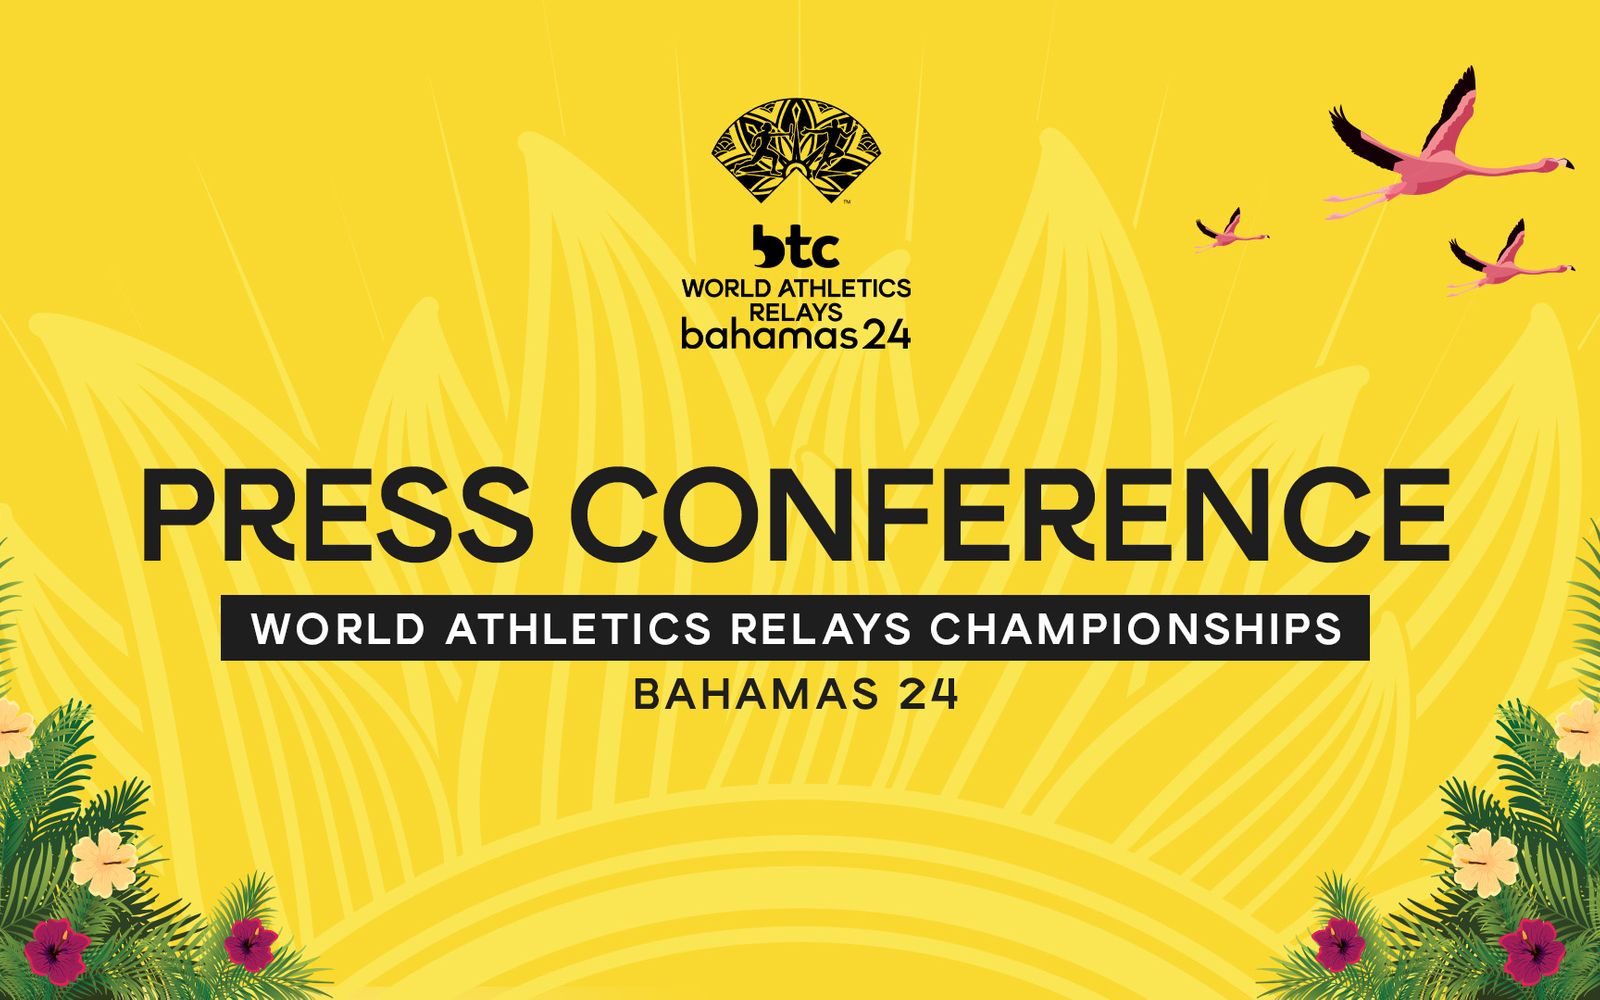 World Athletics Relays Bahamas 24 press conference